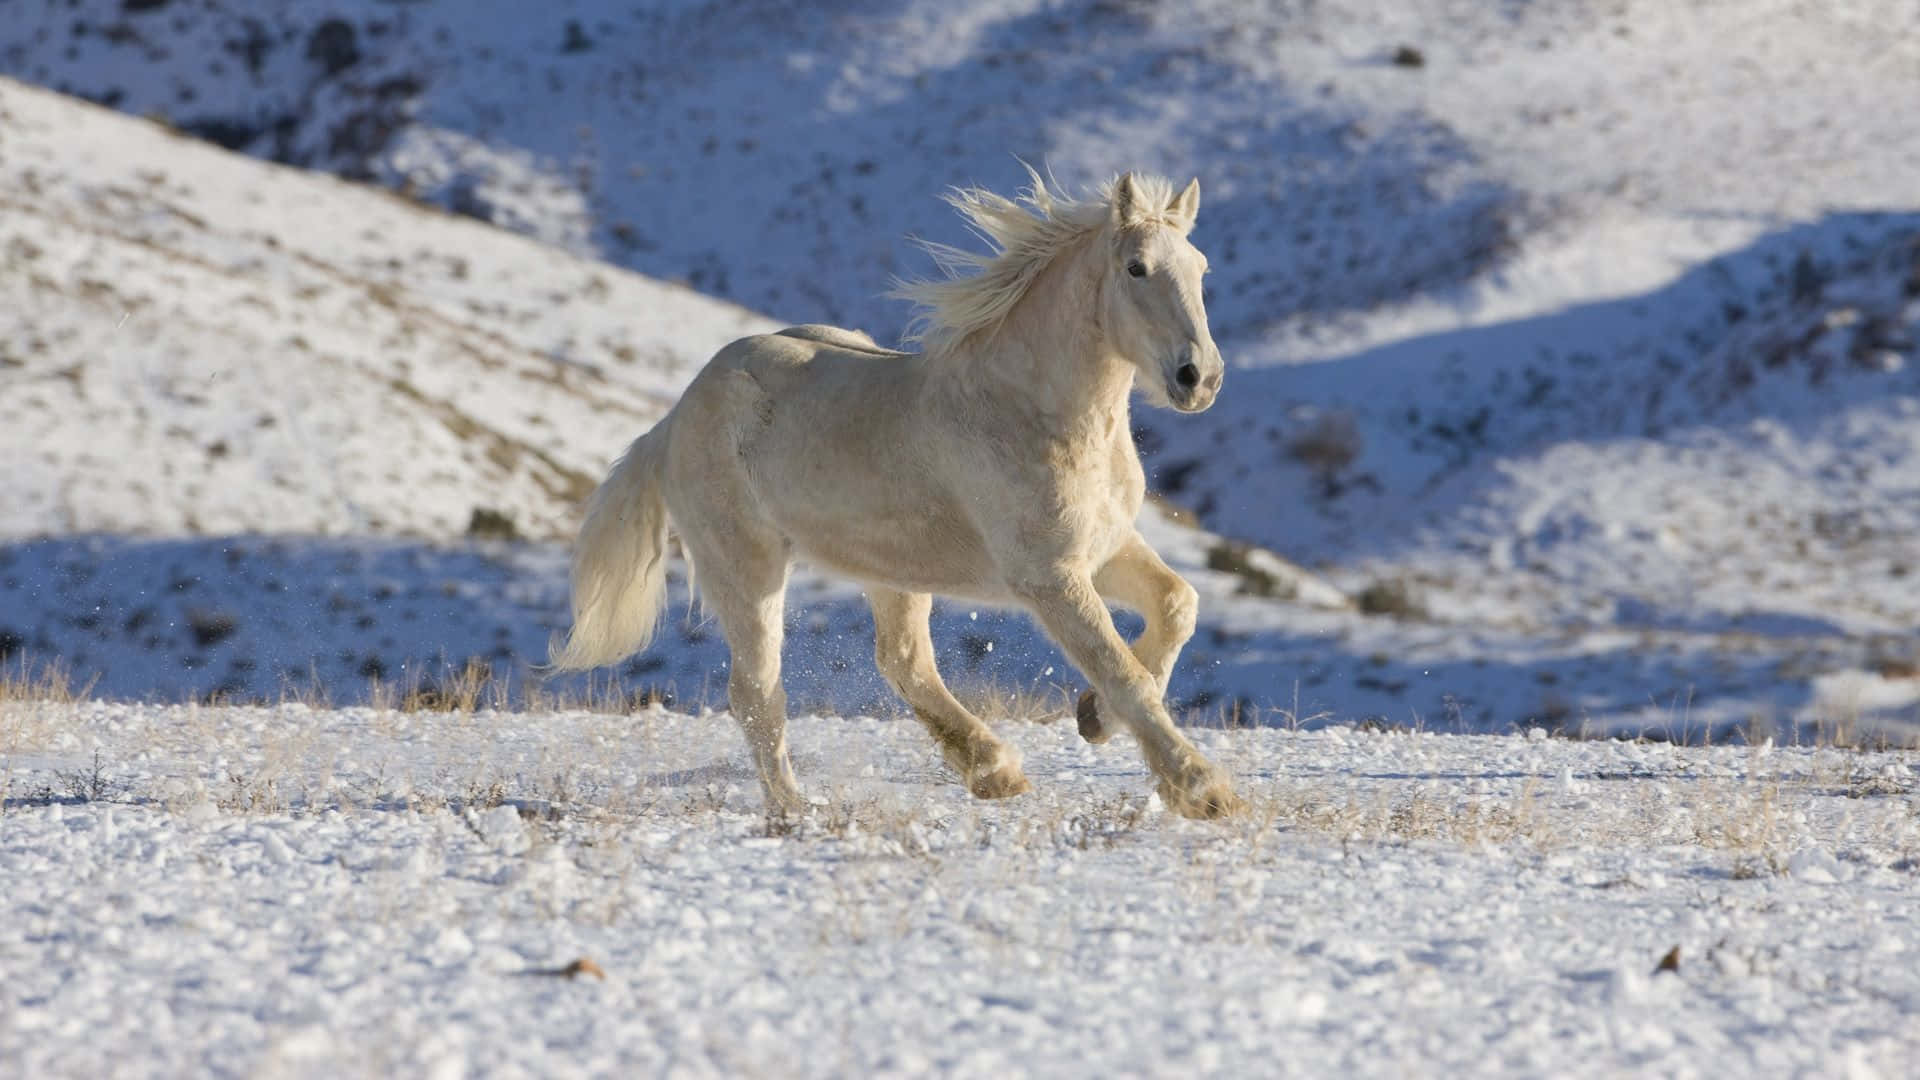 A Wild Palomino Horse in its Natural Habitat